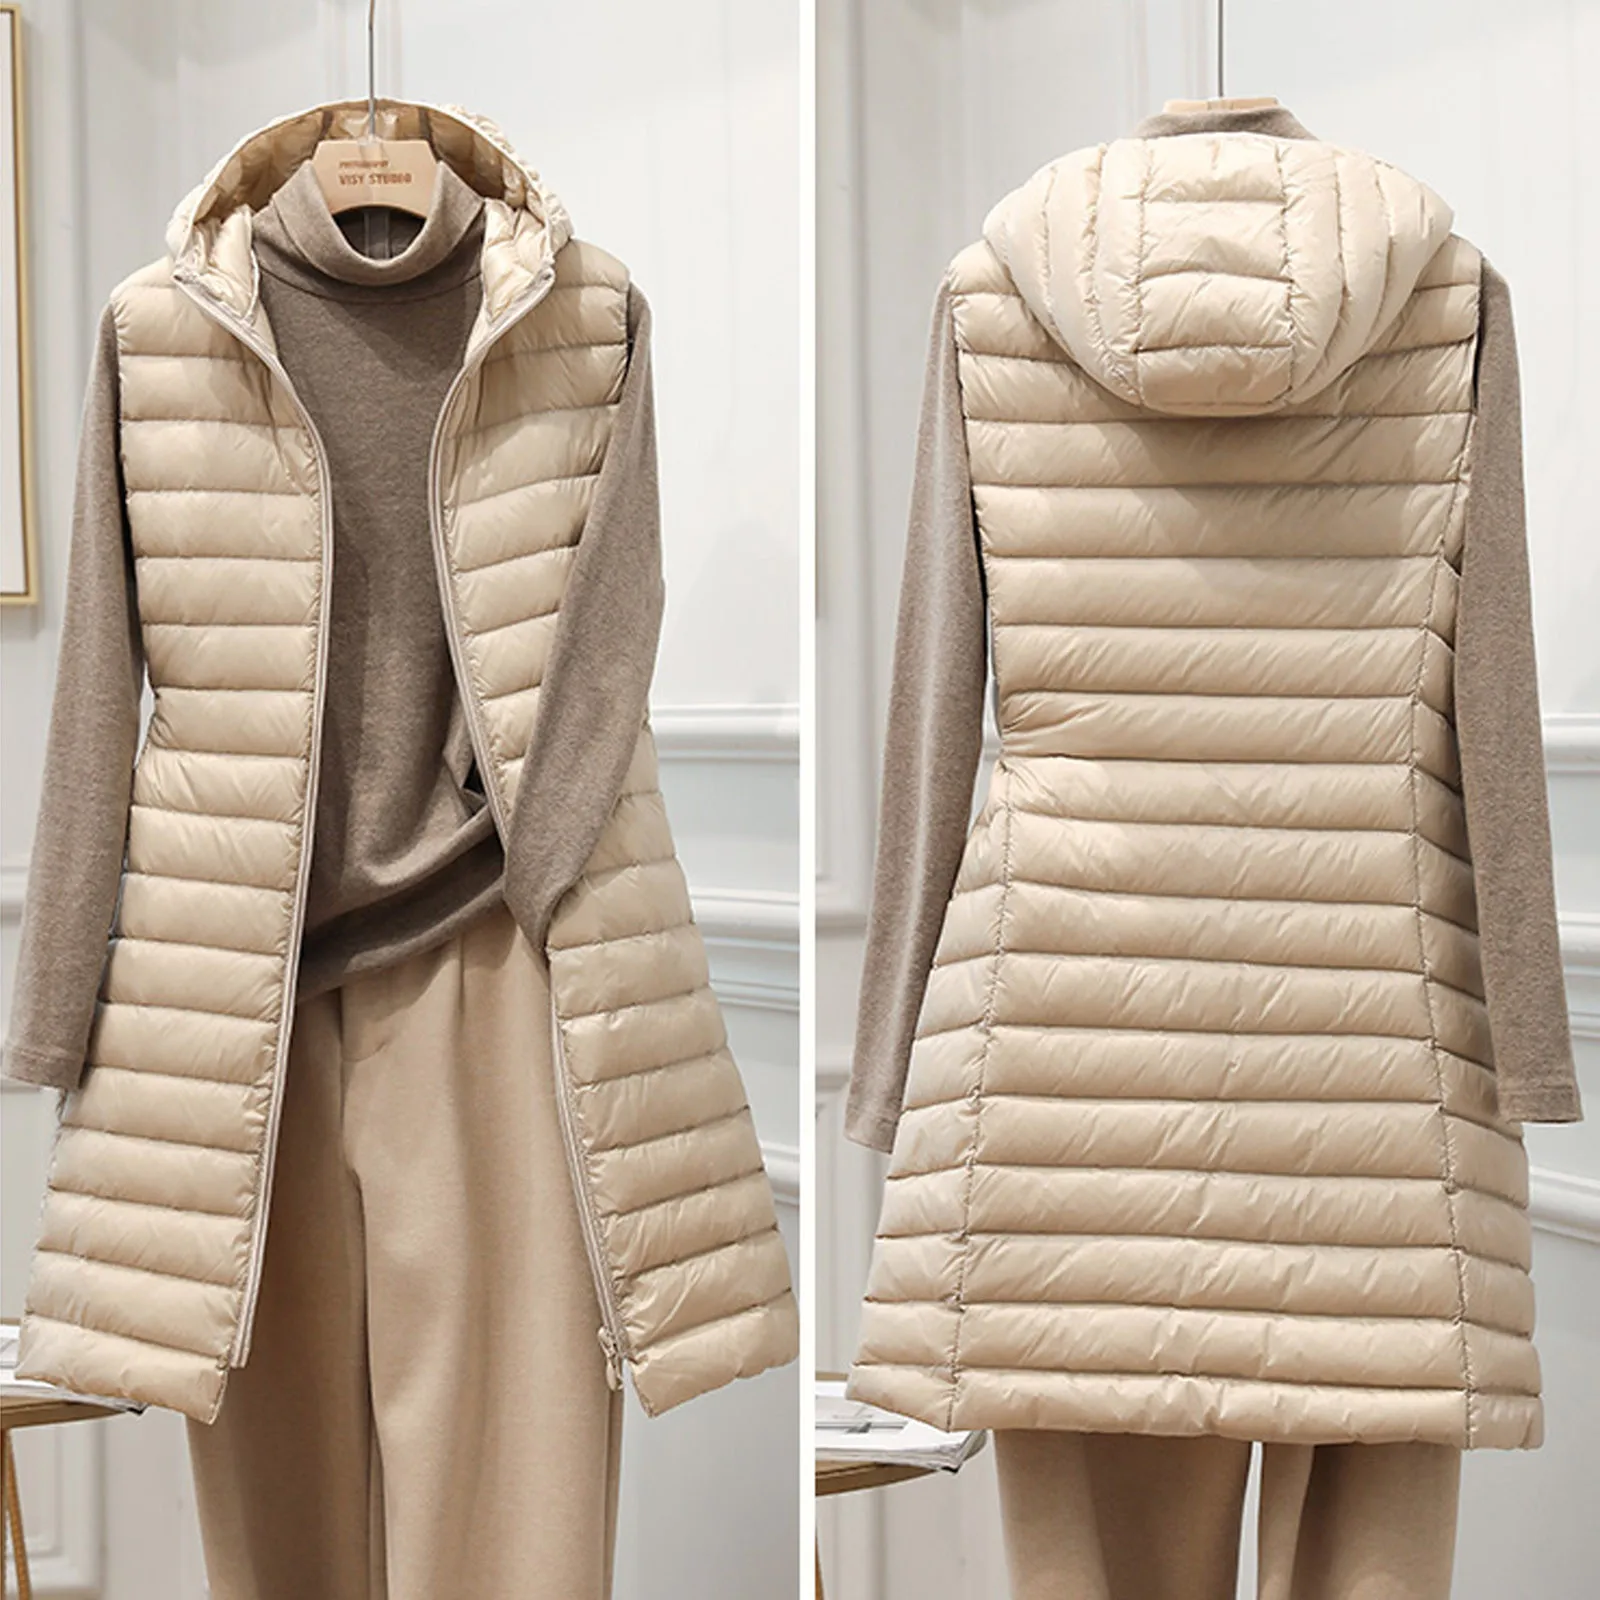 Fashion Women's Jacket Sleeveless Plus Size Hooded Hoodie Waistcoat Vest Long Coat Down Cotton Padded Jacket Outwear Gilet